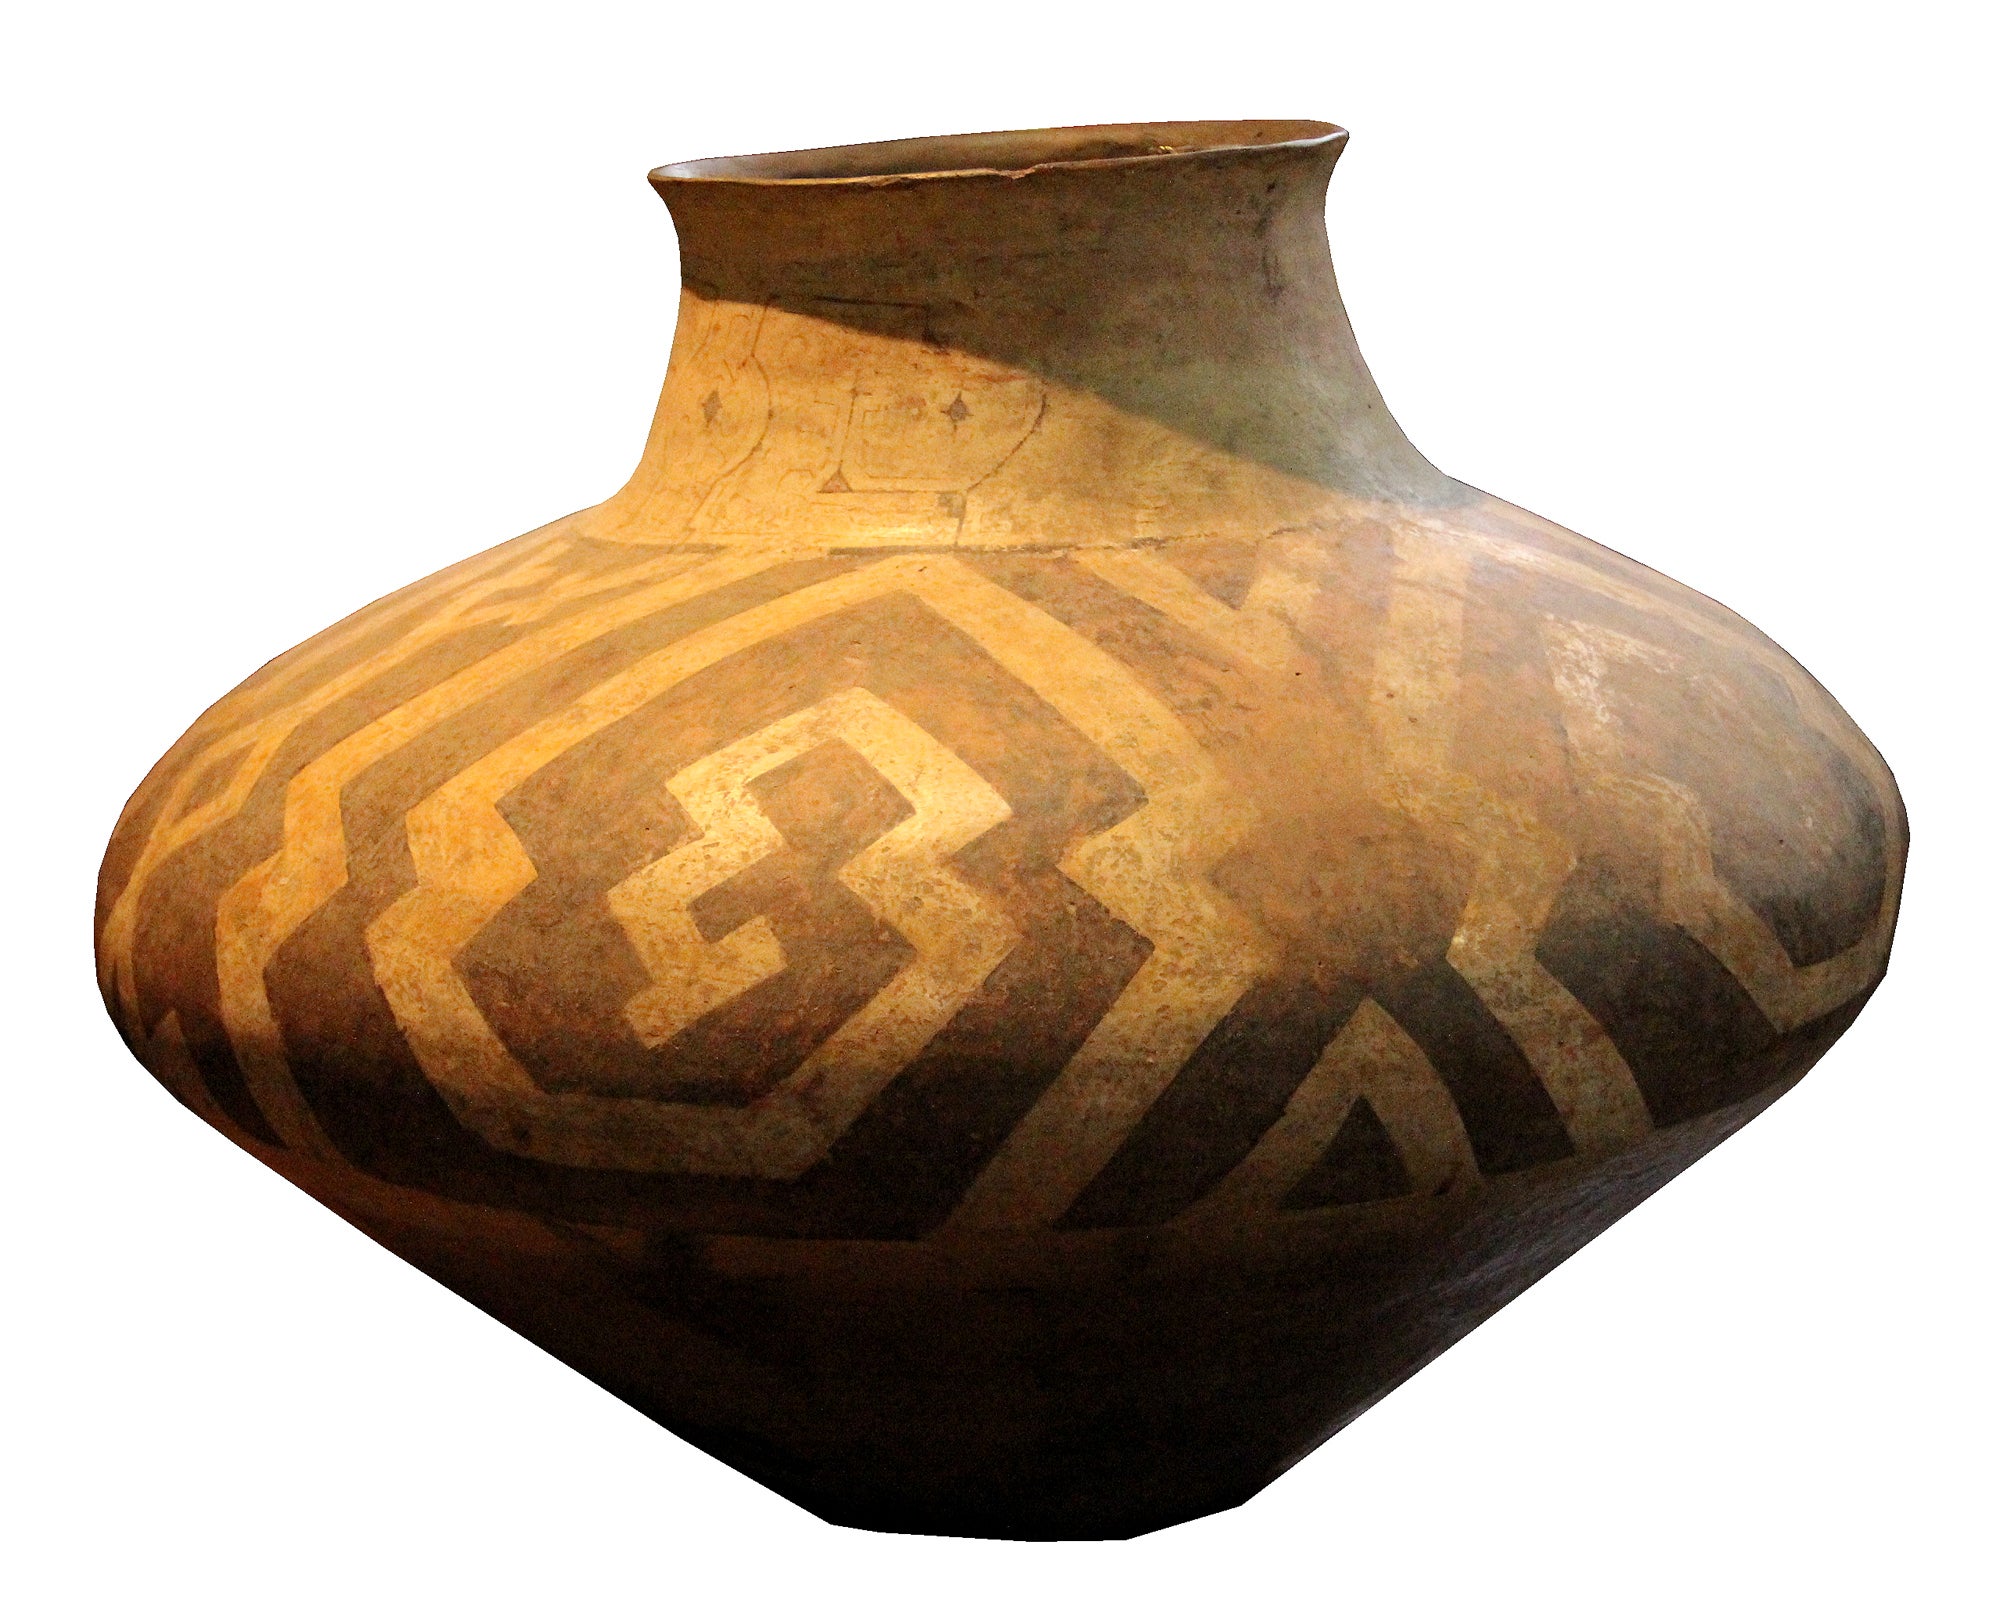 An 18th Century Peruvian Zibibbo Clay Urn